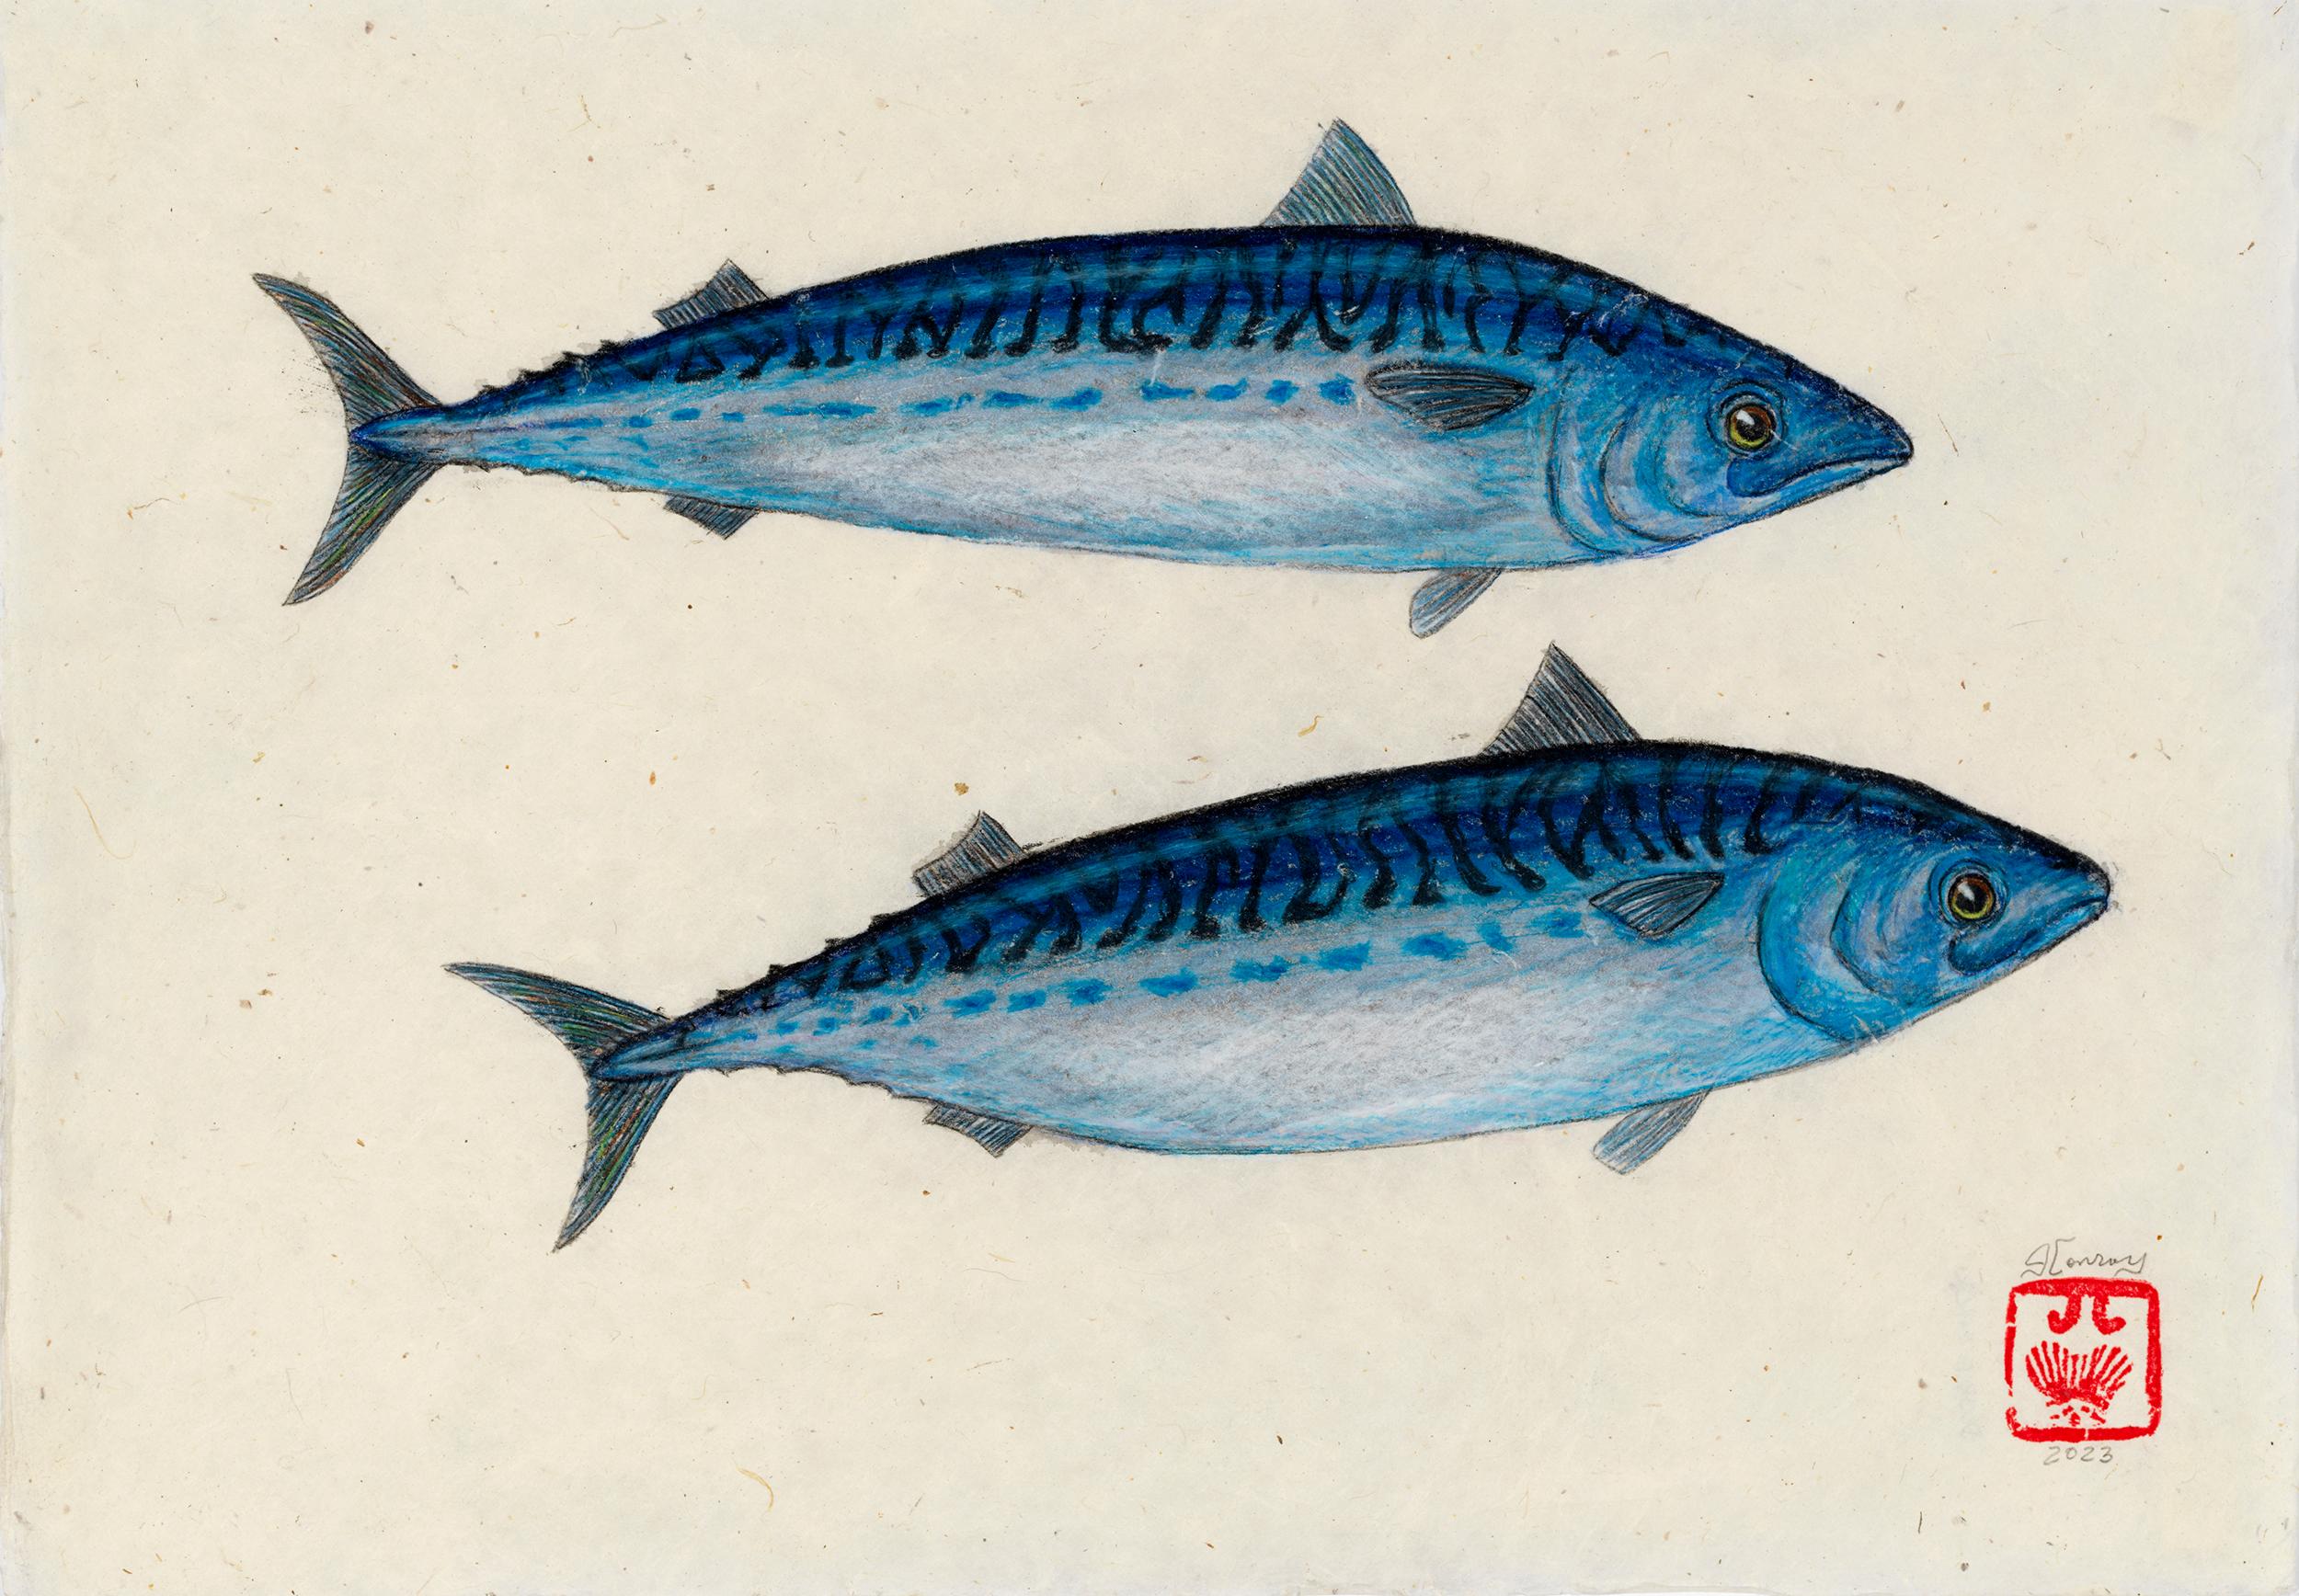 Two Macks - Gyotaku Style Sumi Ink Painting of Two Mackerel on Paper